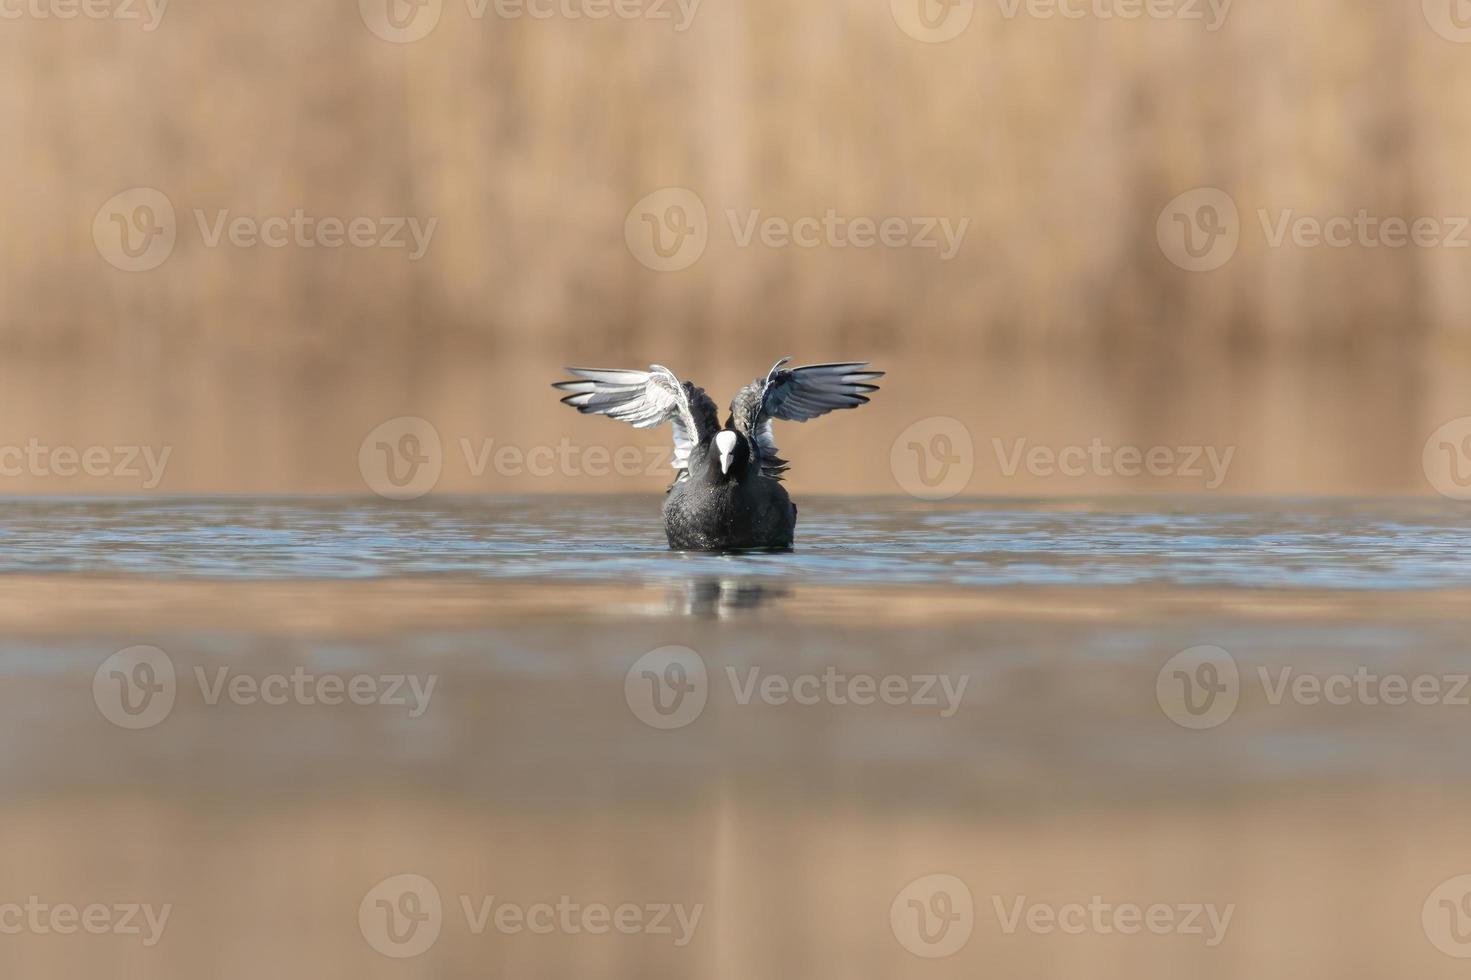 a coot starting flight on a lake photo